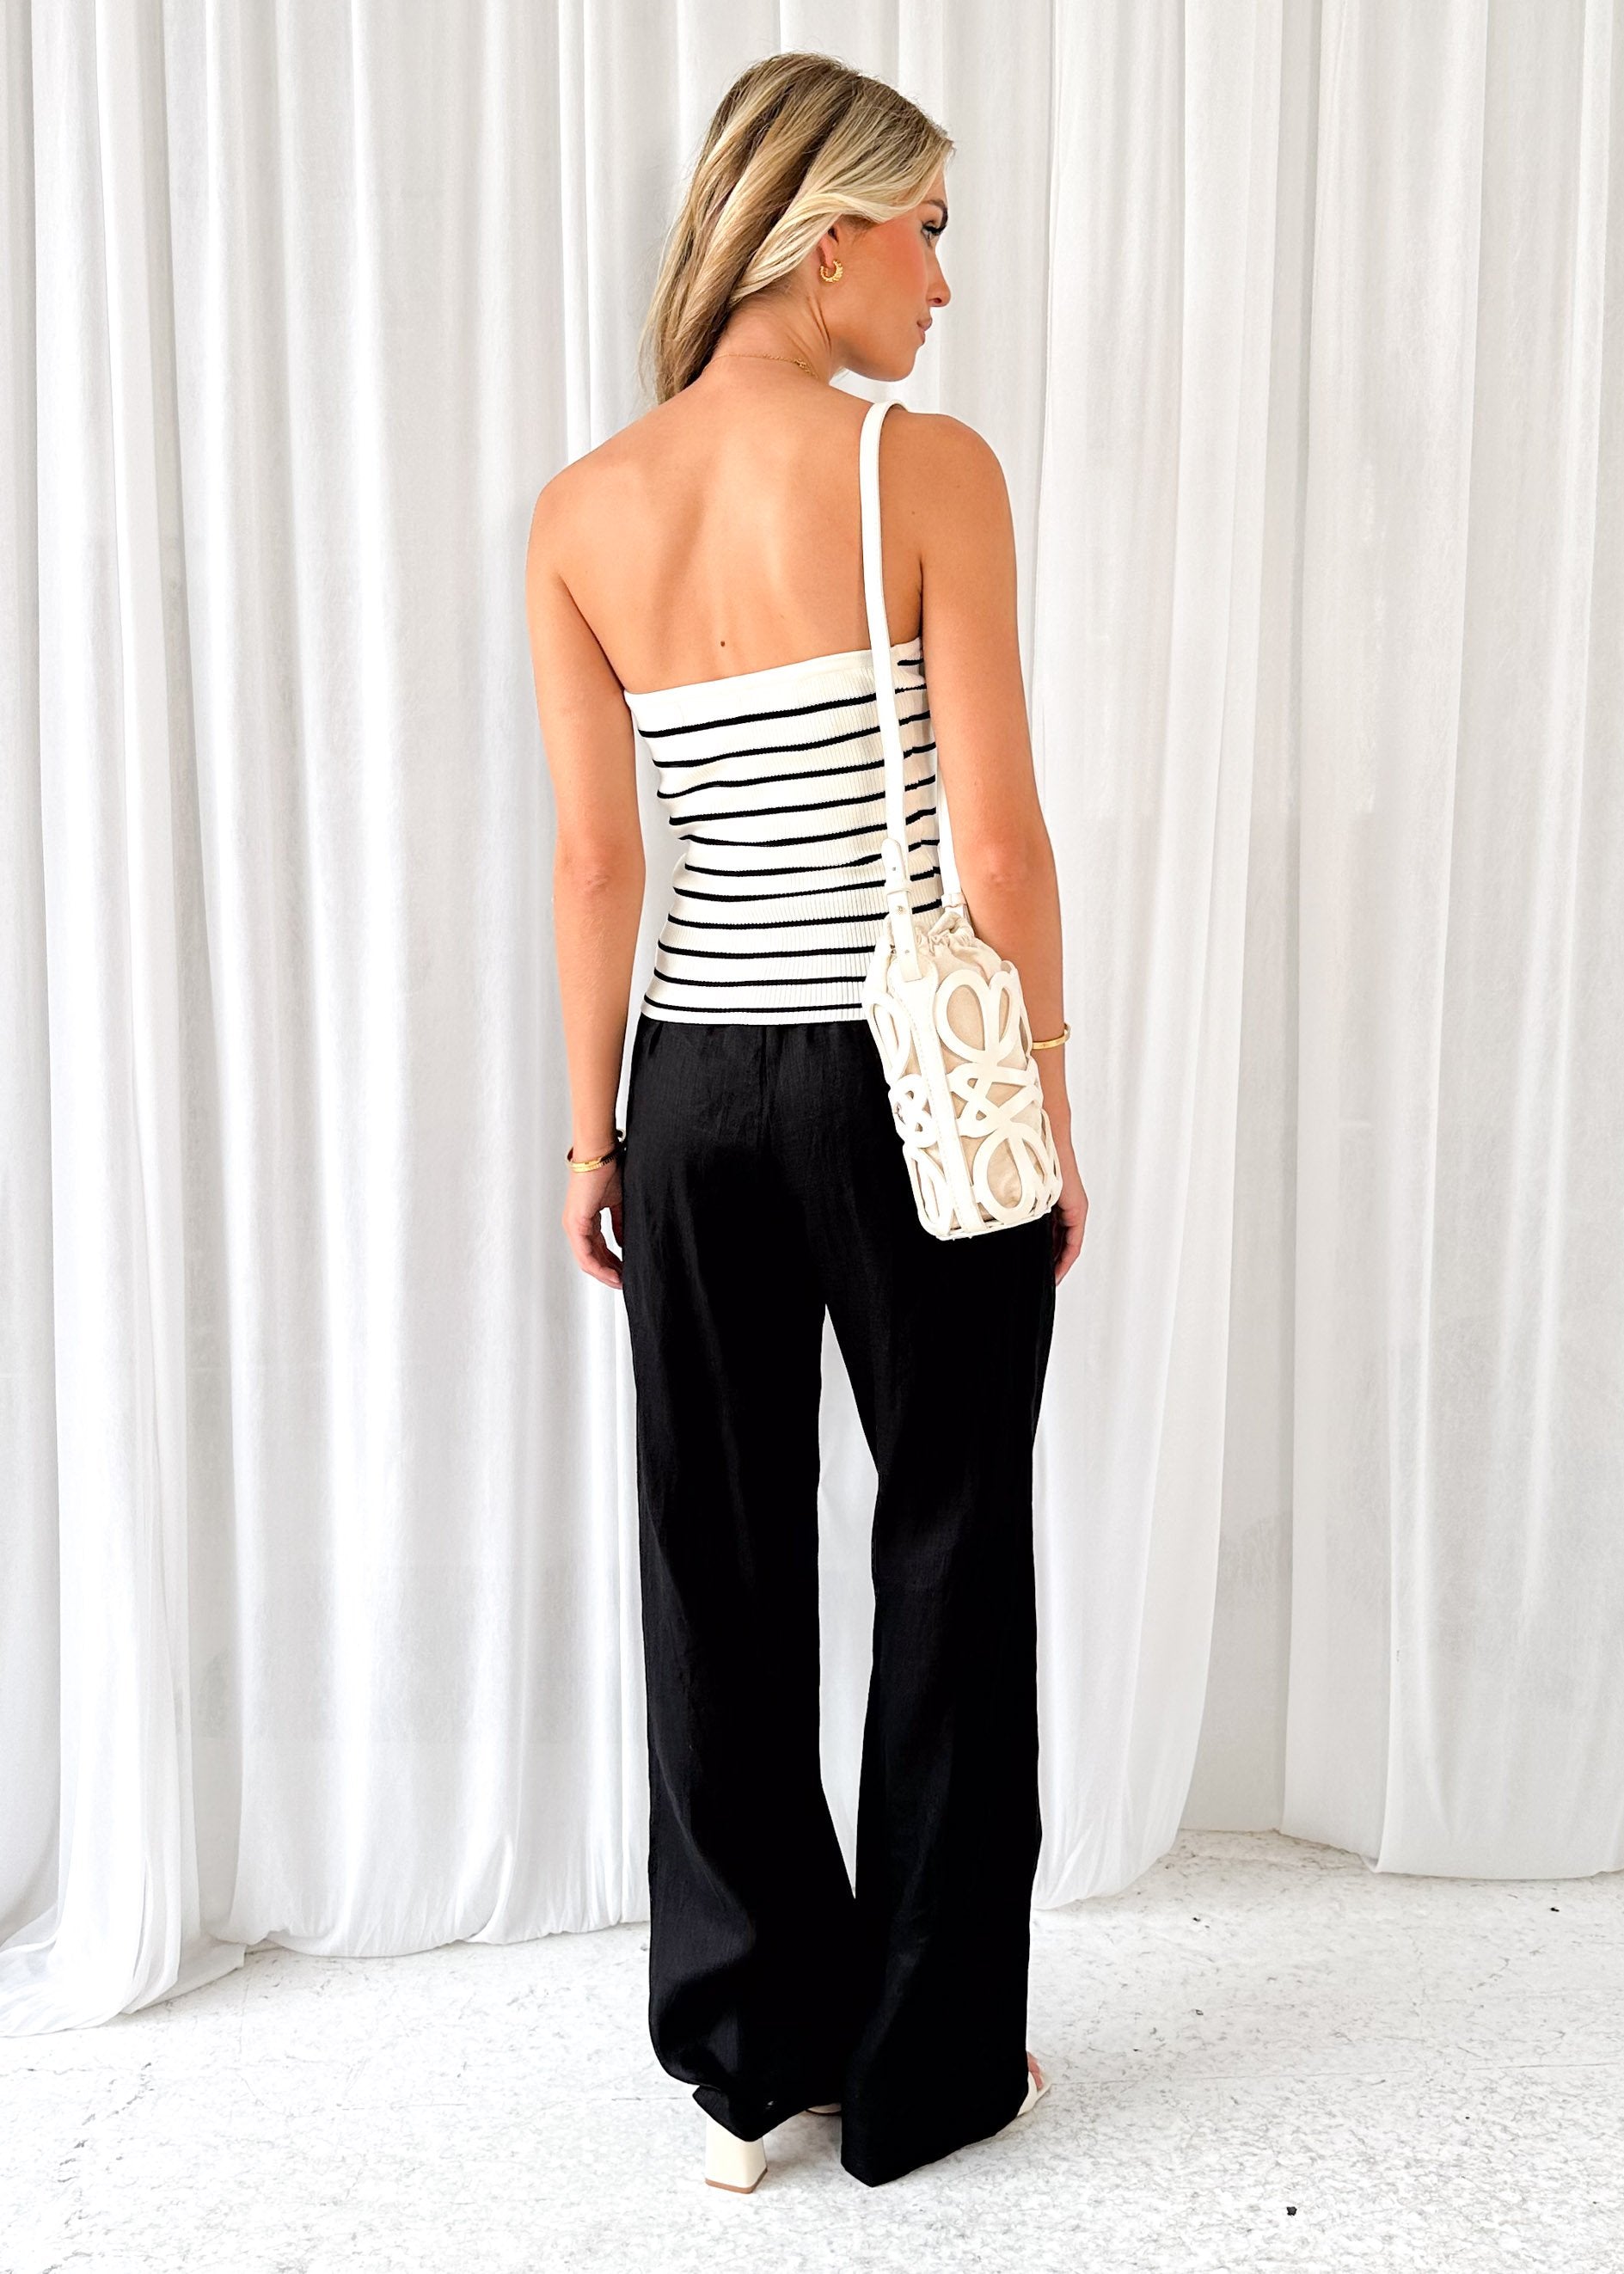 Zailo Strapless Knit Top - White Stripe